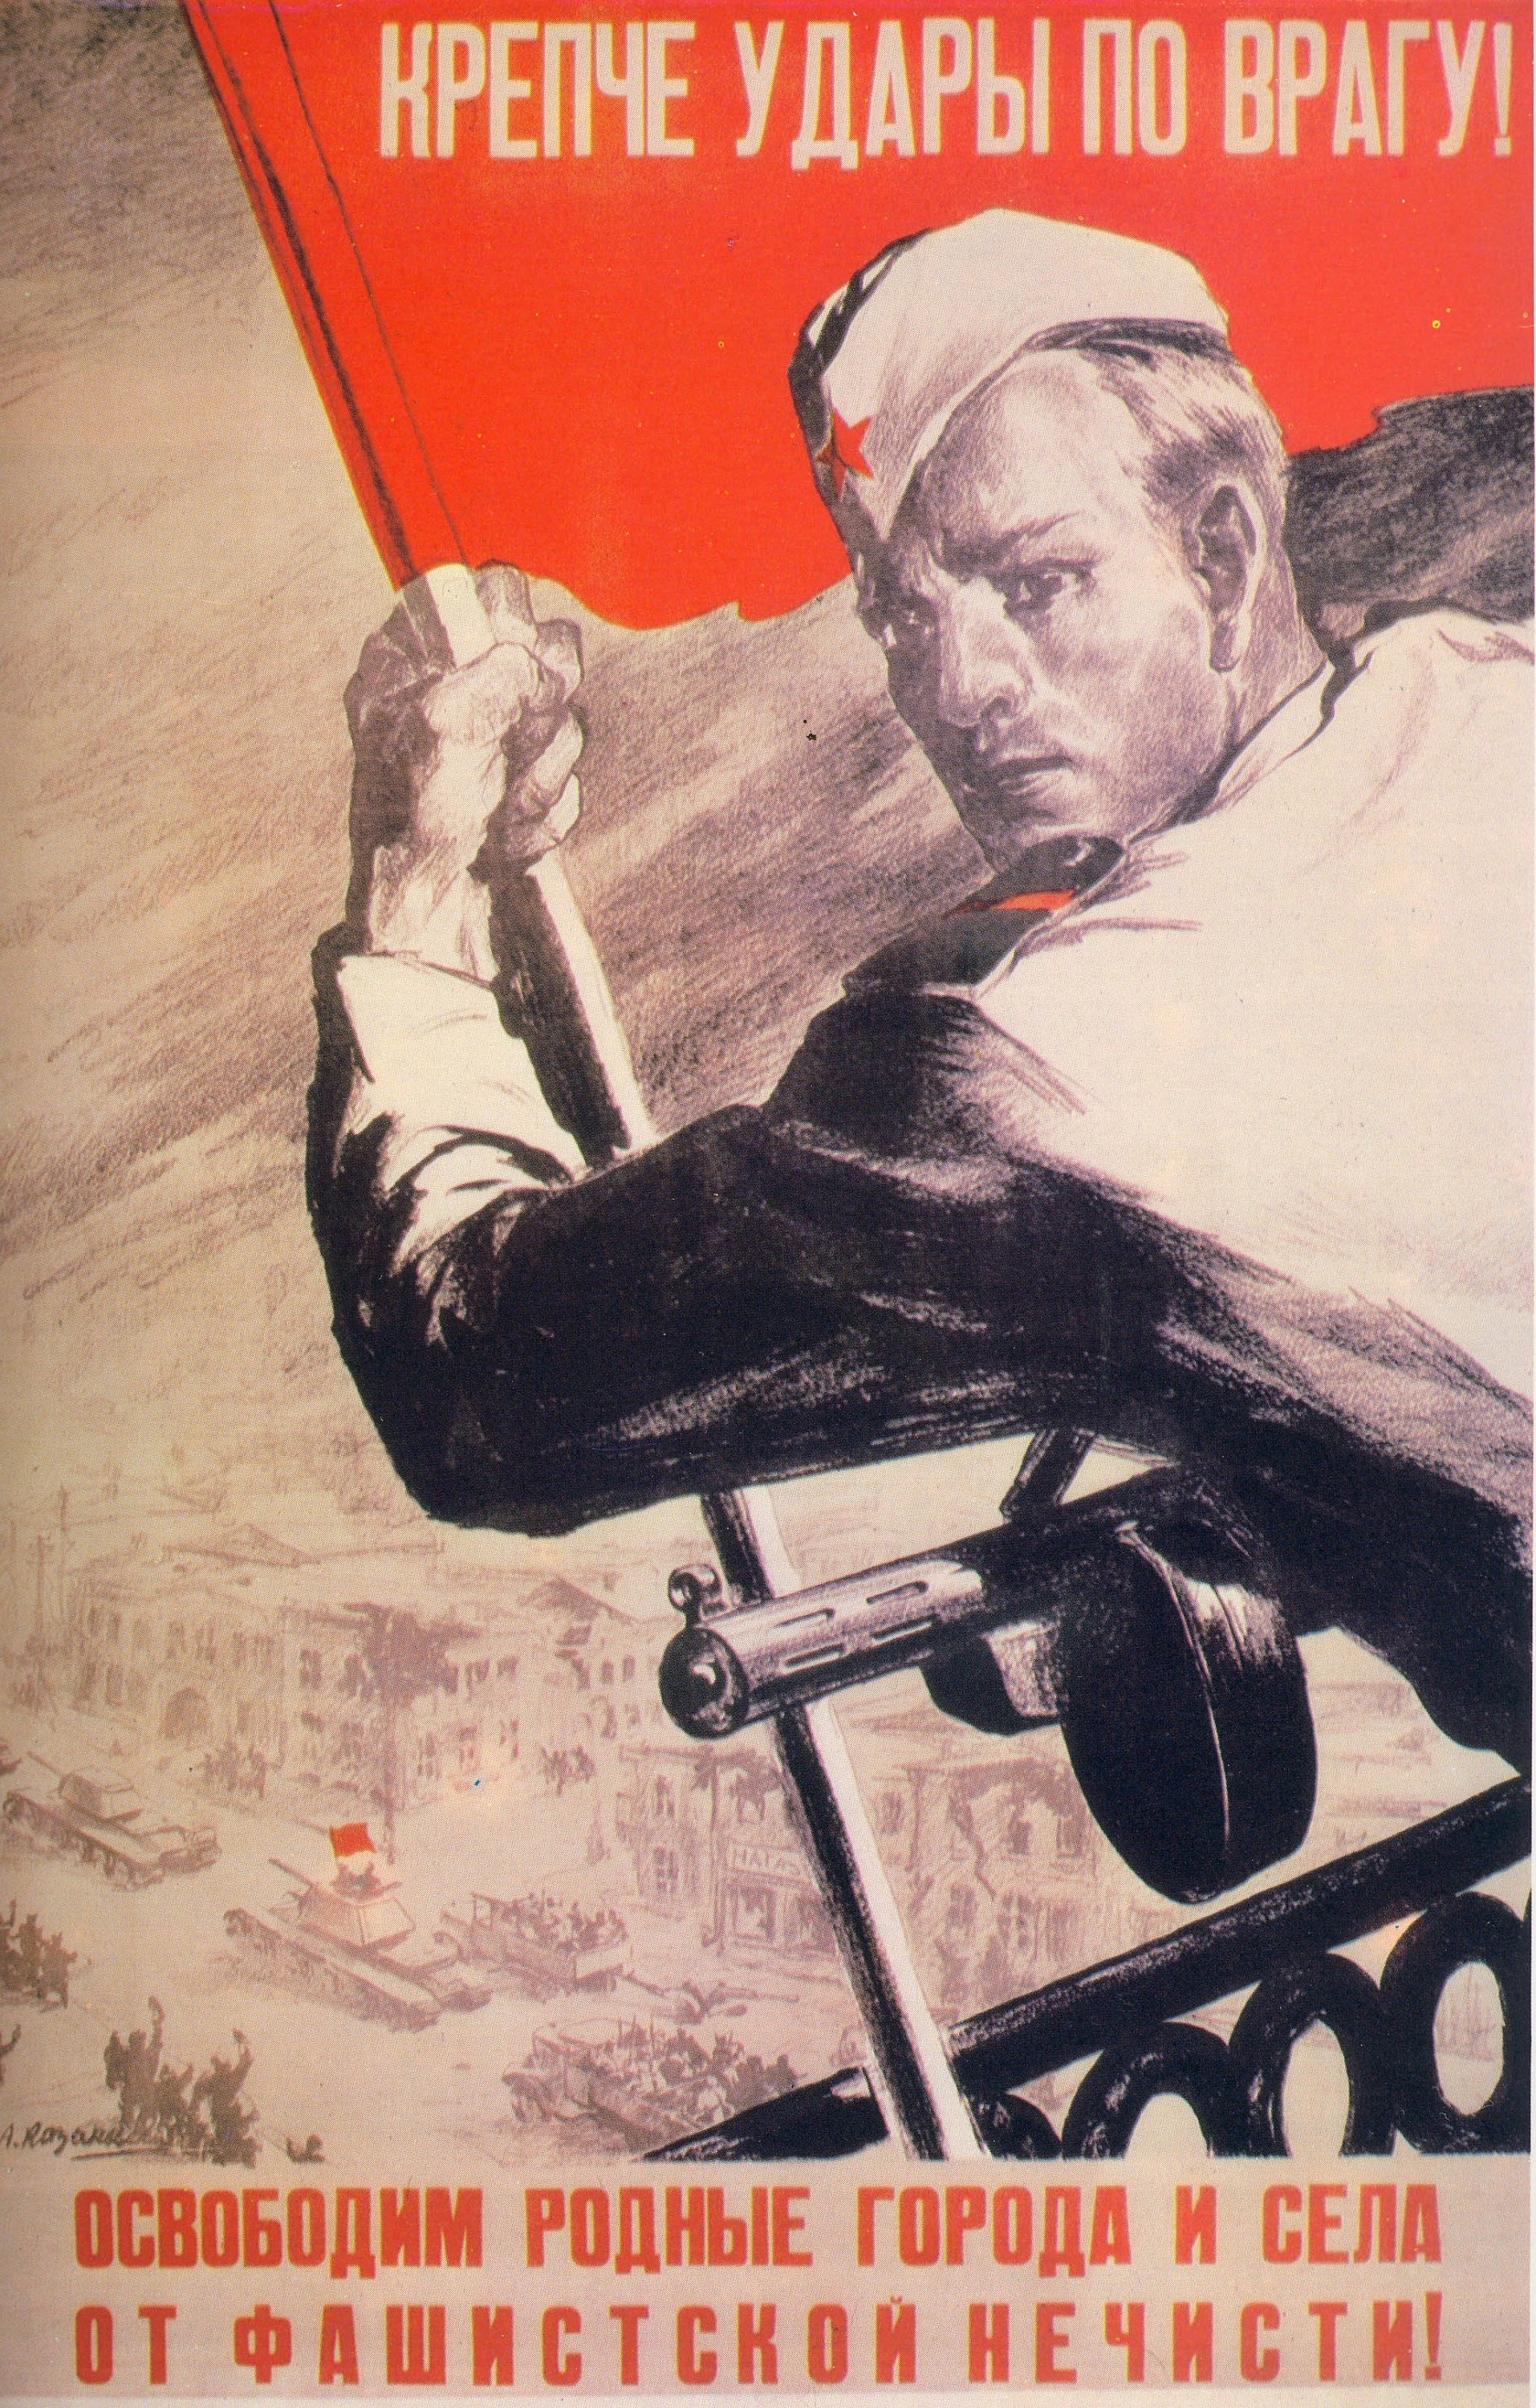 wwii-printable-wall-art-wwii-propaganda-poster-ww2-soviet-etsy